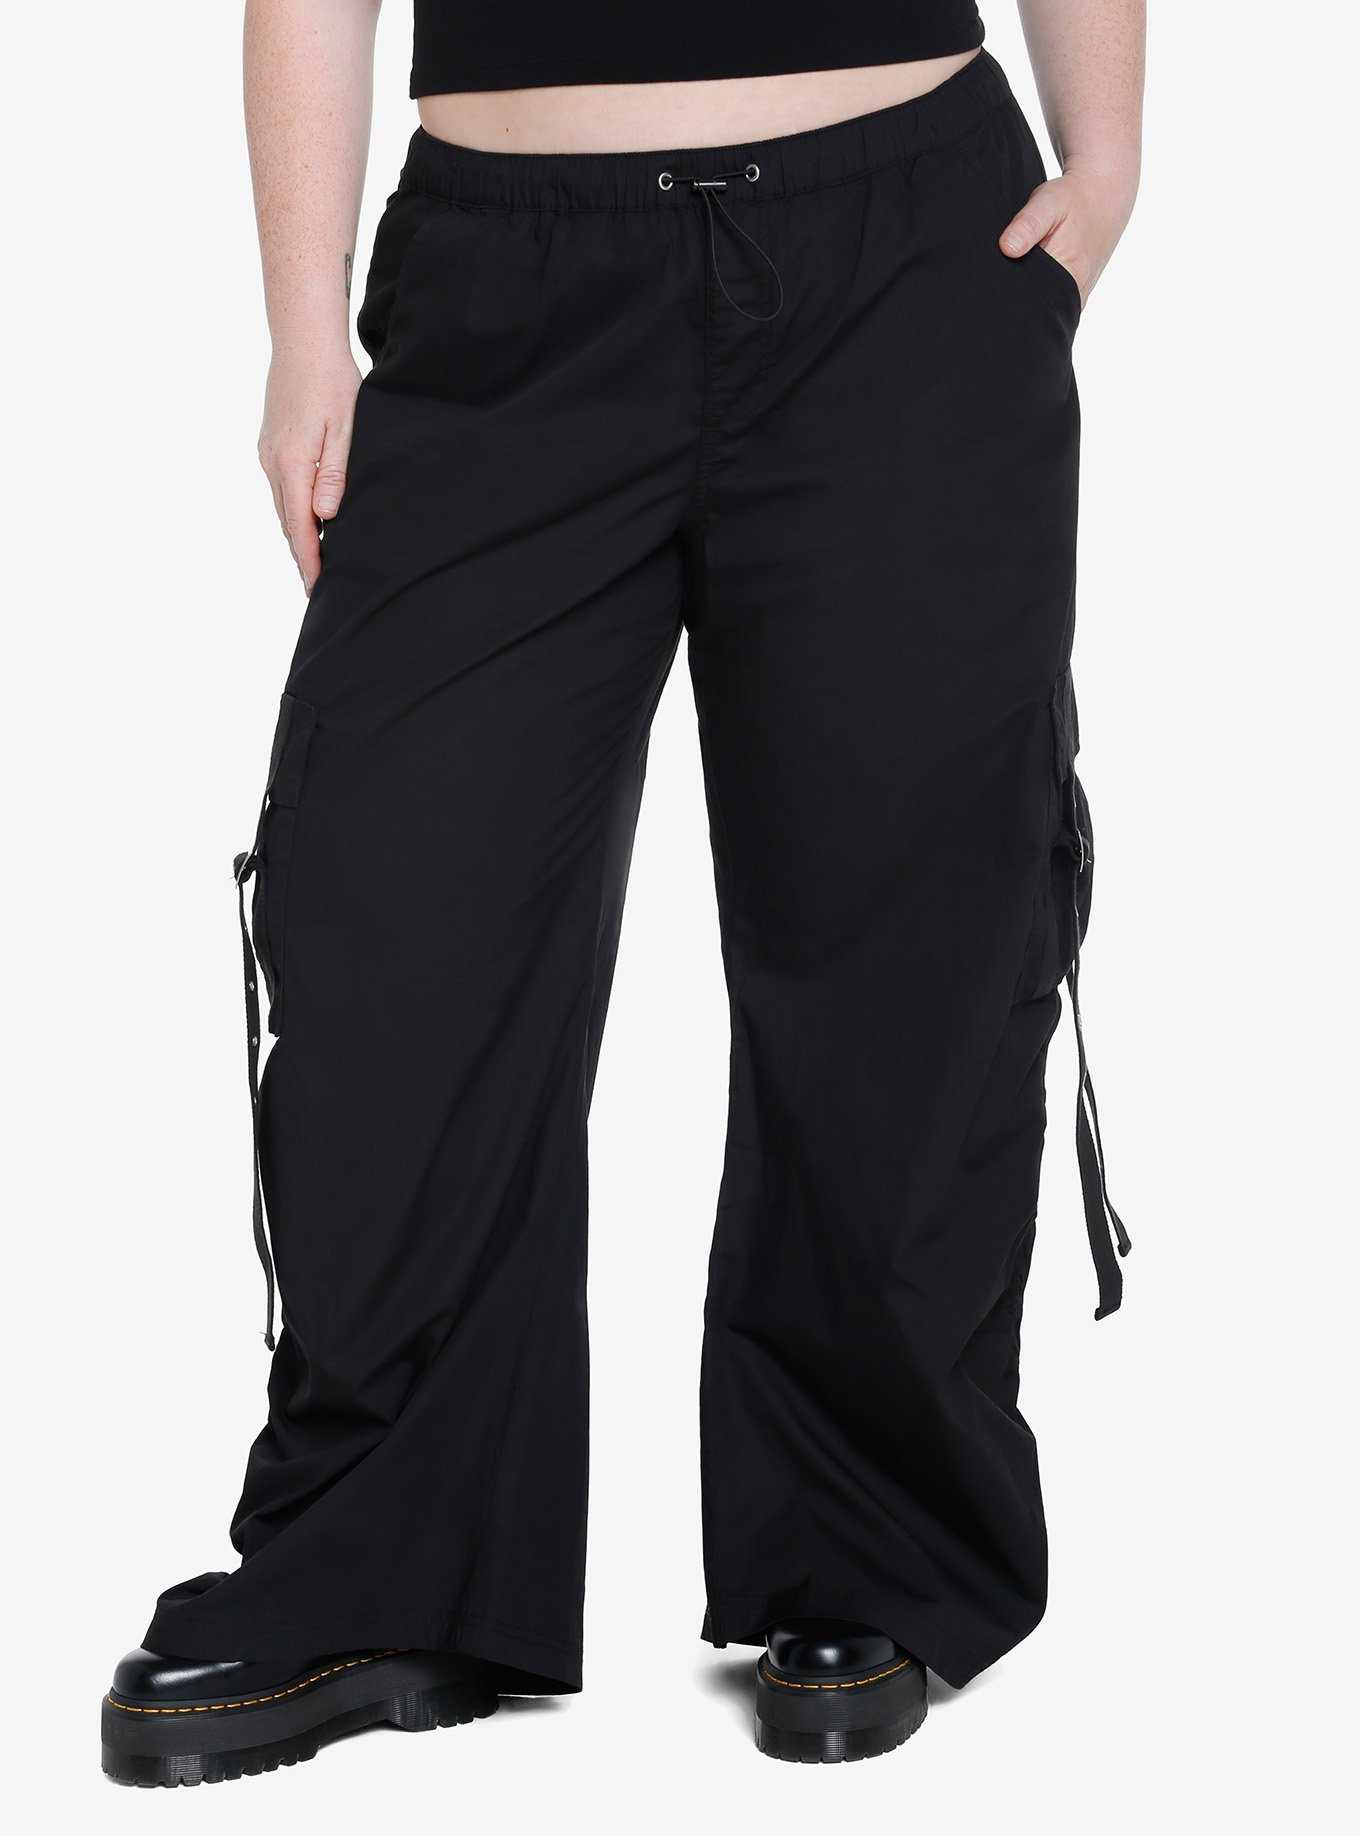 Black Grommet Belt Girls Flare Pants Plus Size